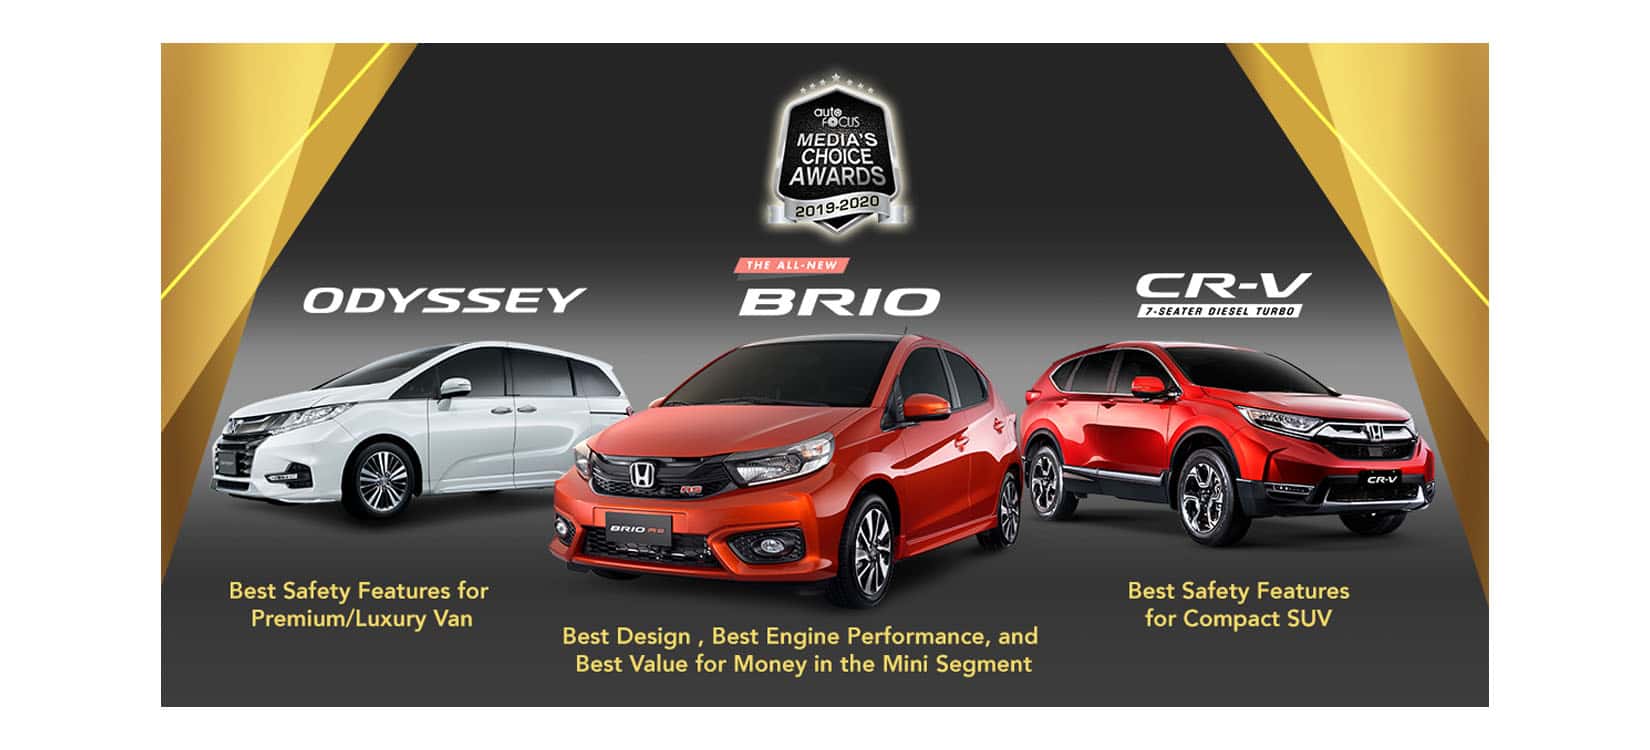 Honda Bags 5 Awards at the latest Auto Focus  Media’s Choice Awards